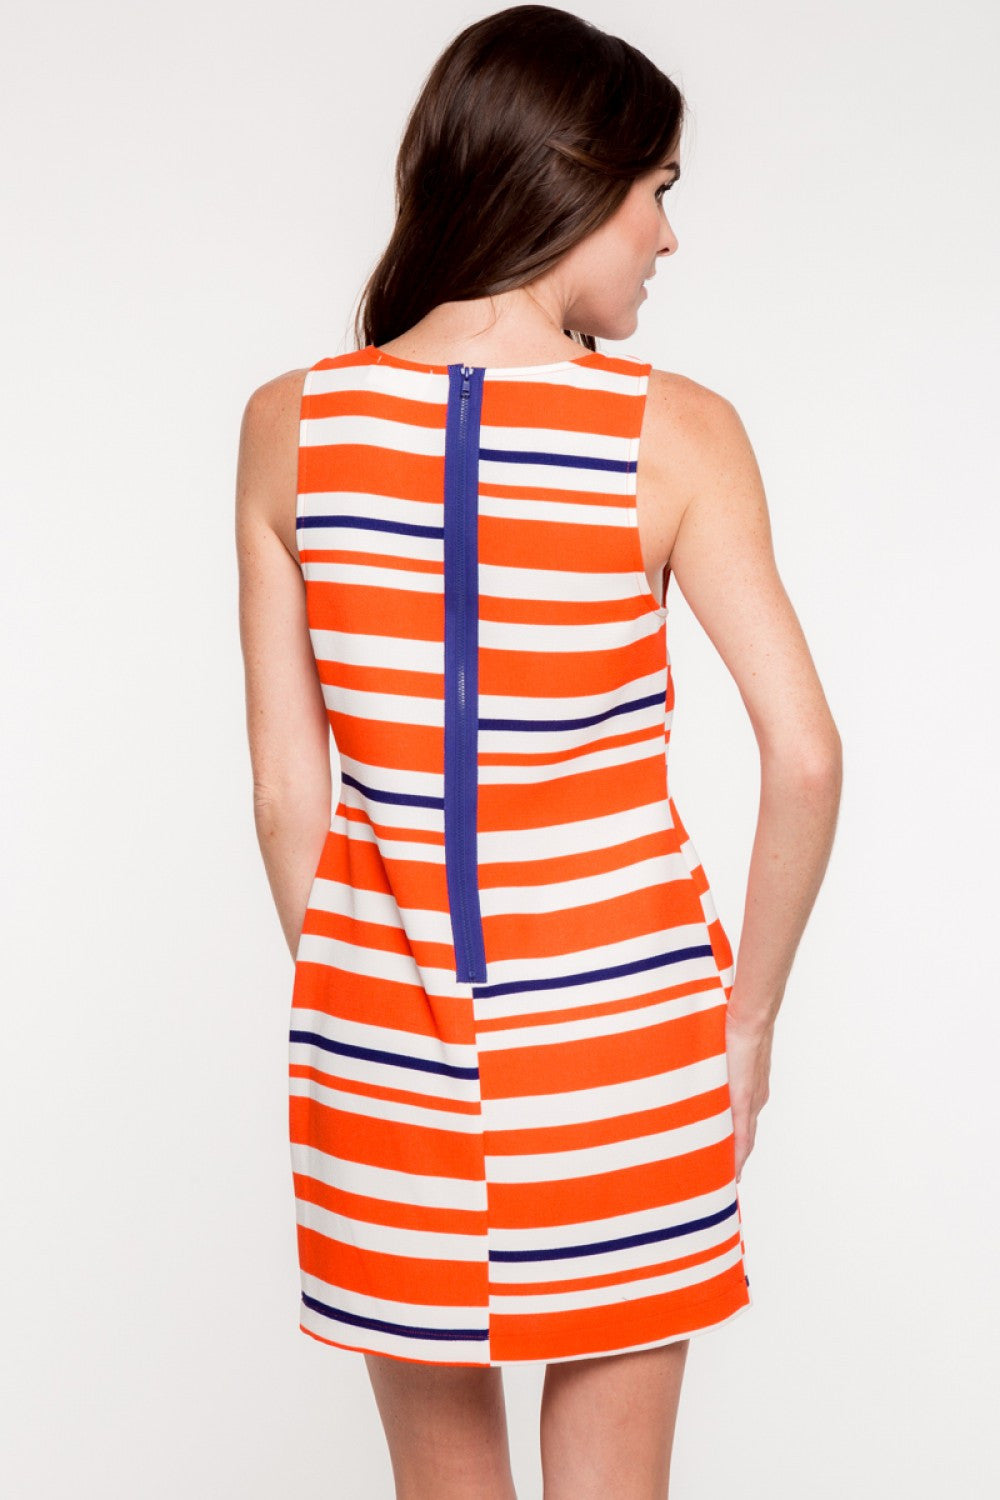 Everly: Aubie Dress, Orange/Navy